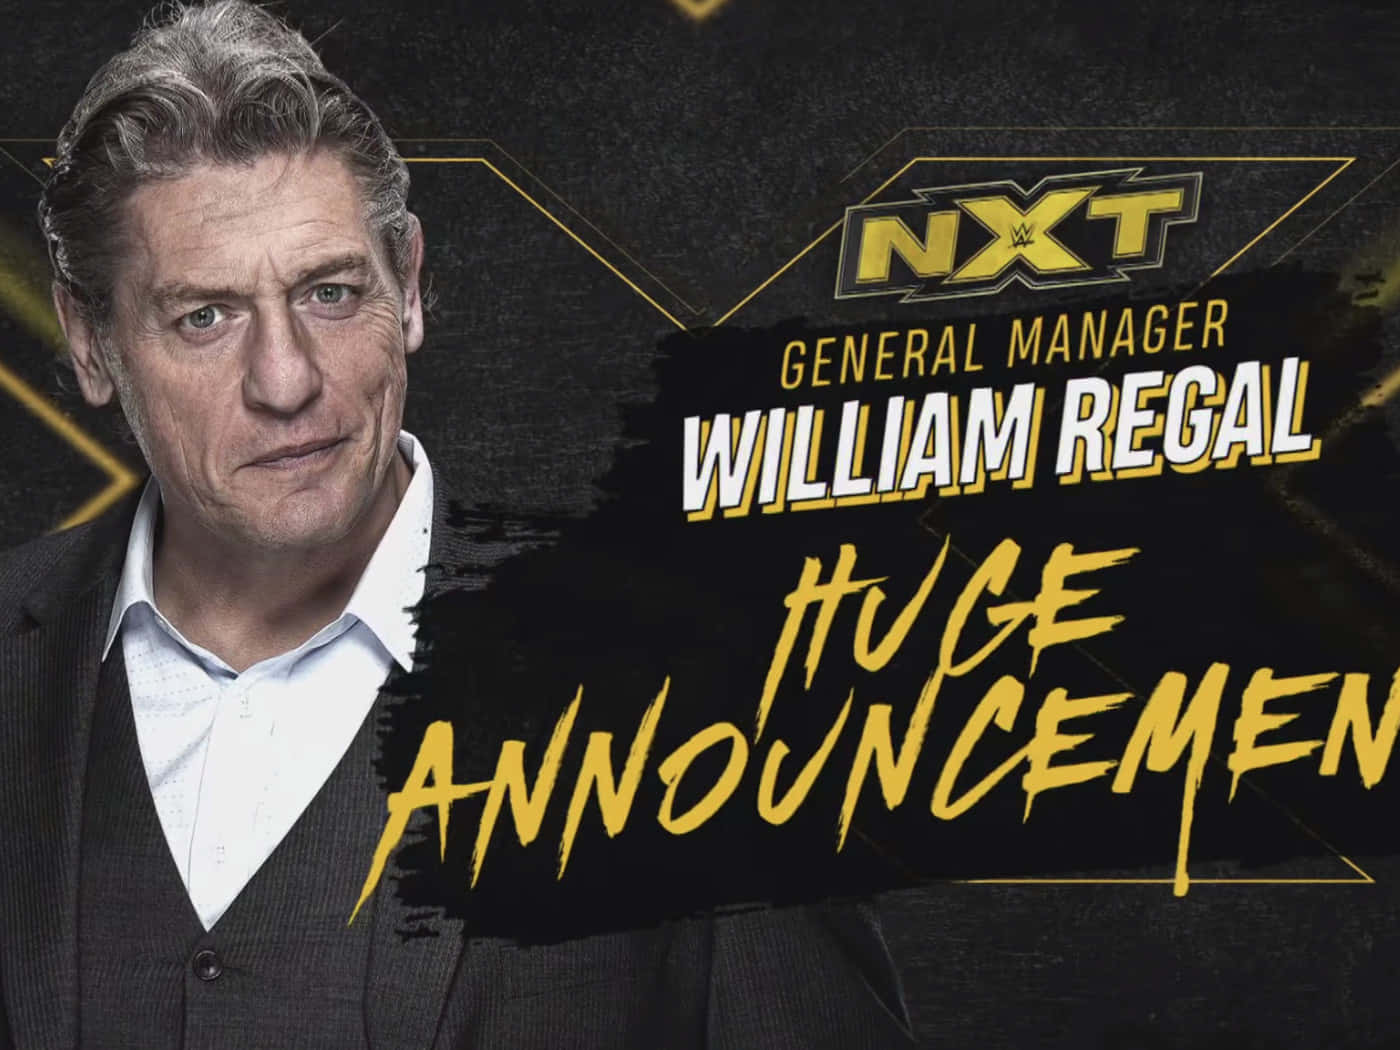 William Regal WWE NXT General Manager Digital Art Wallpaper